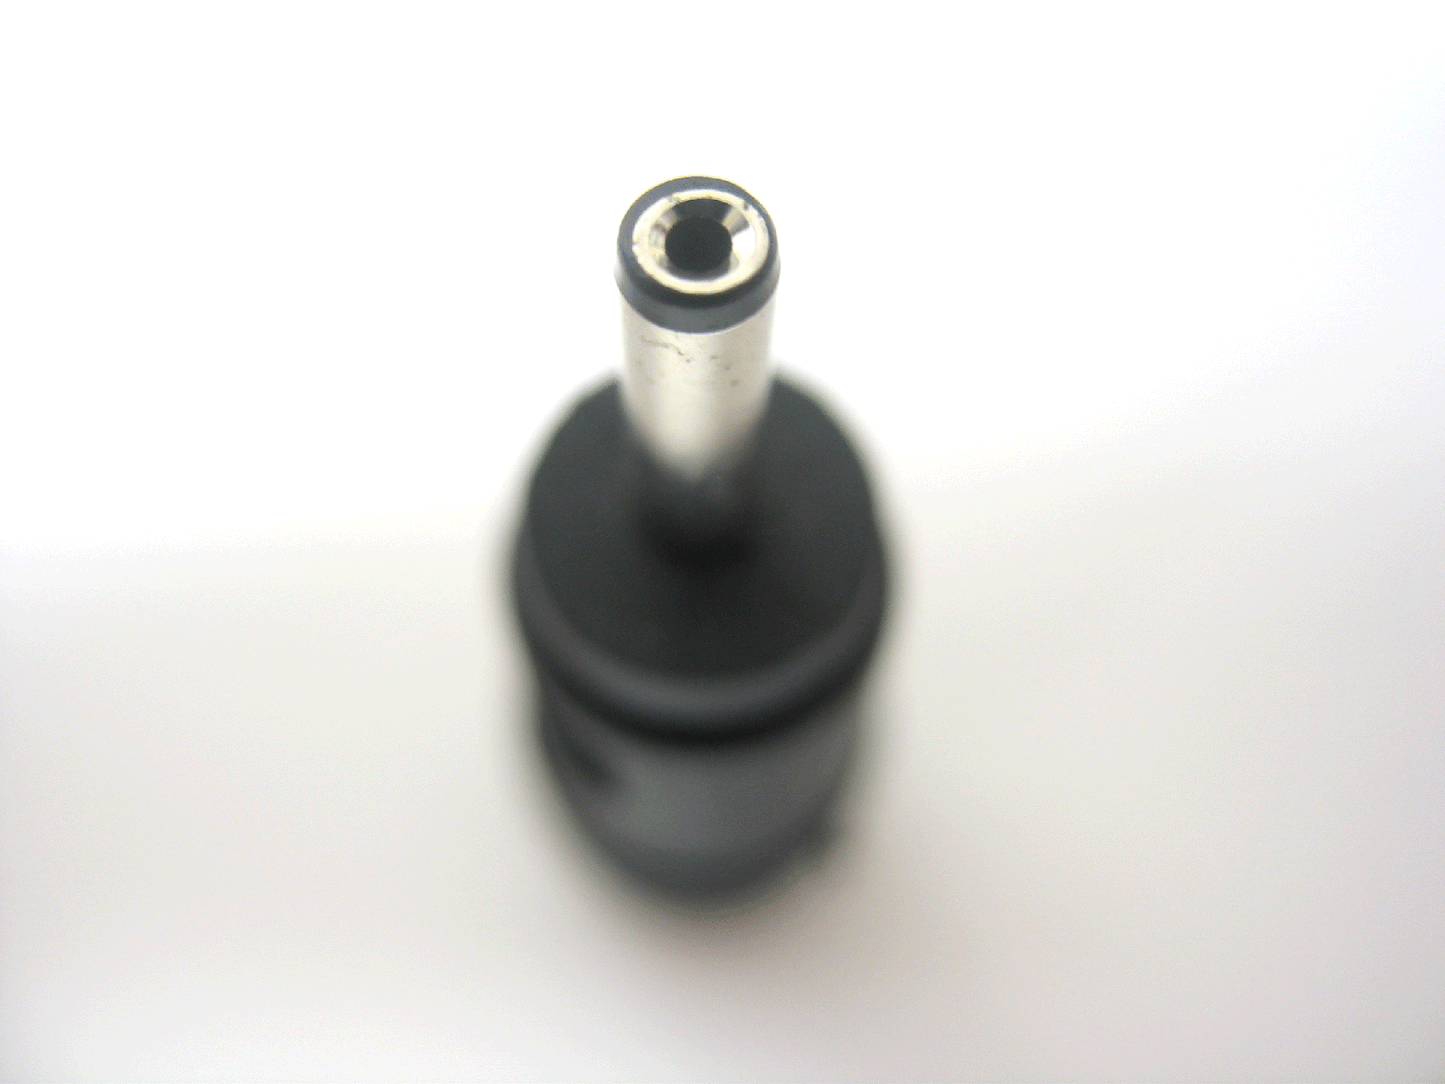 2.1mm x 5.5mm to 1.1mm x 3.0mm DC Power Plug Adaptor